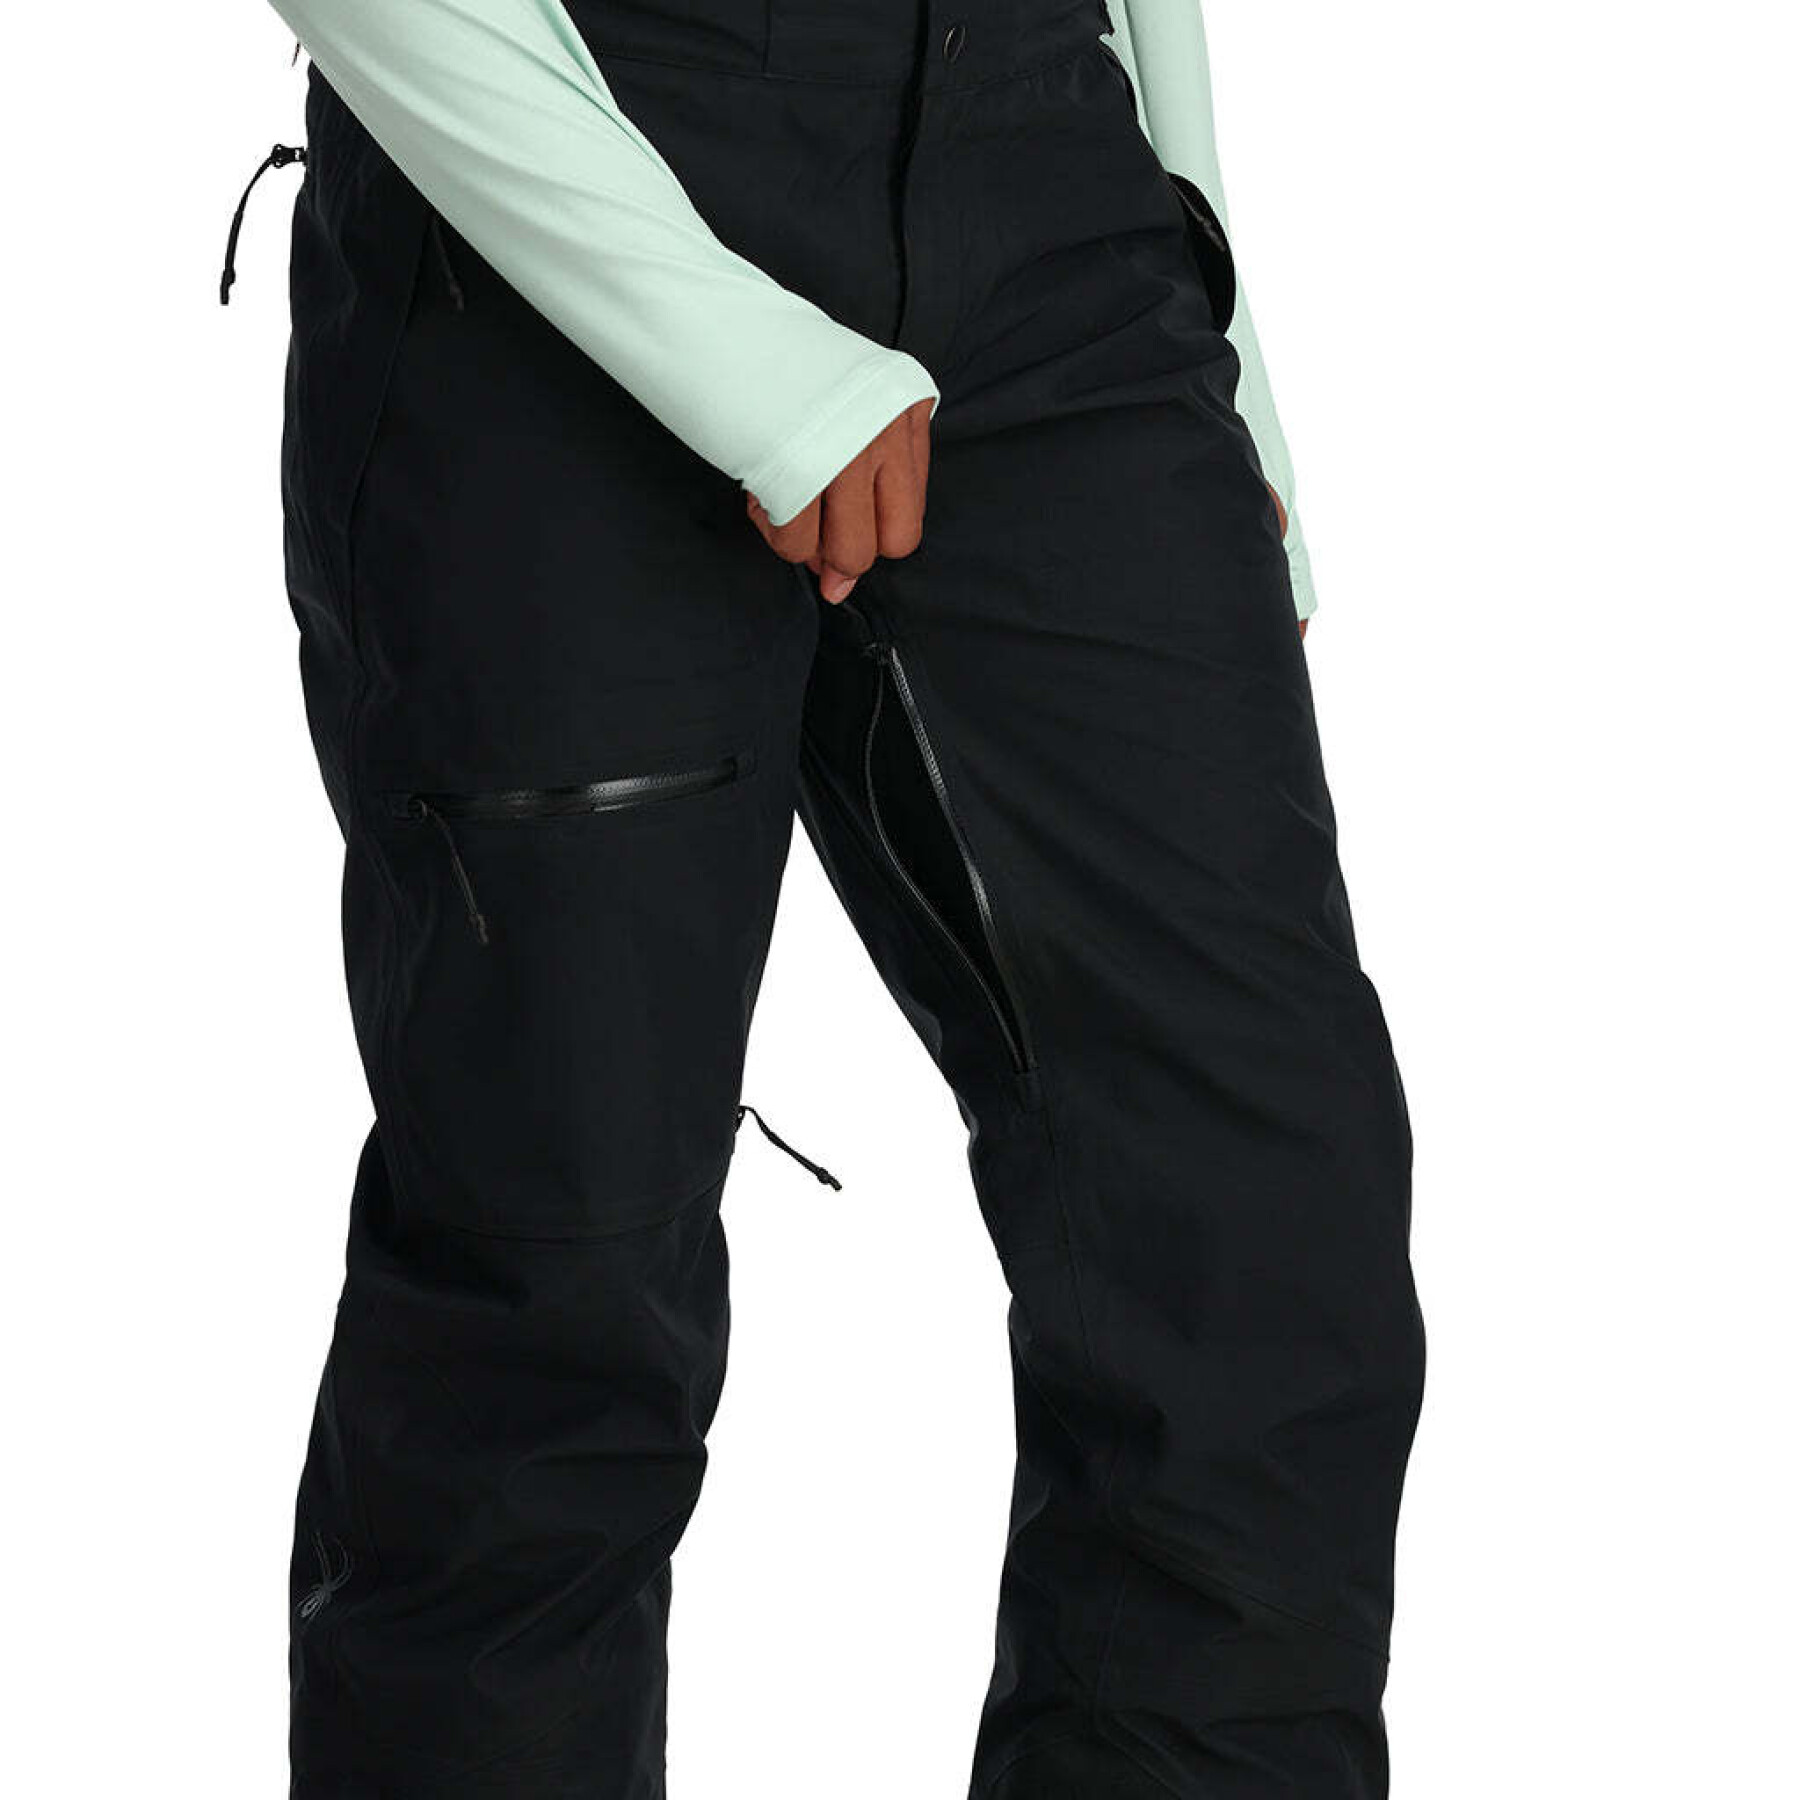 Women's ski pants Spyder Turret GTX Shell